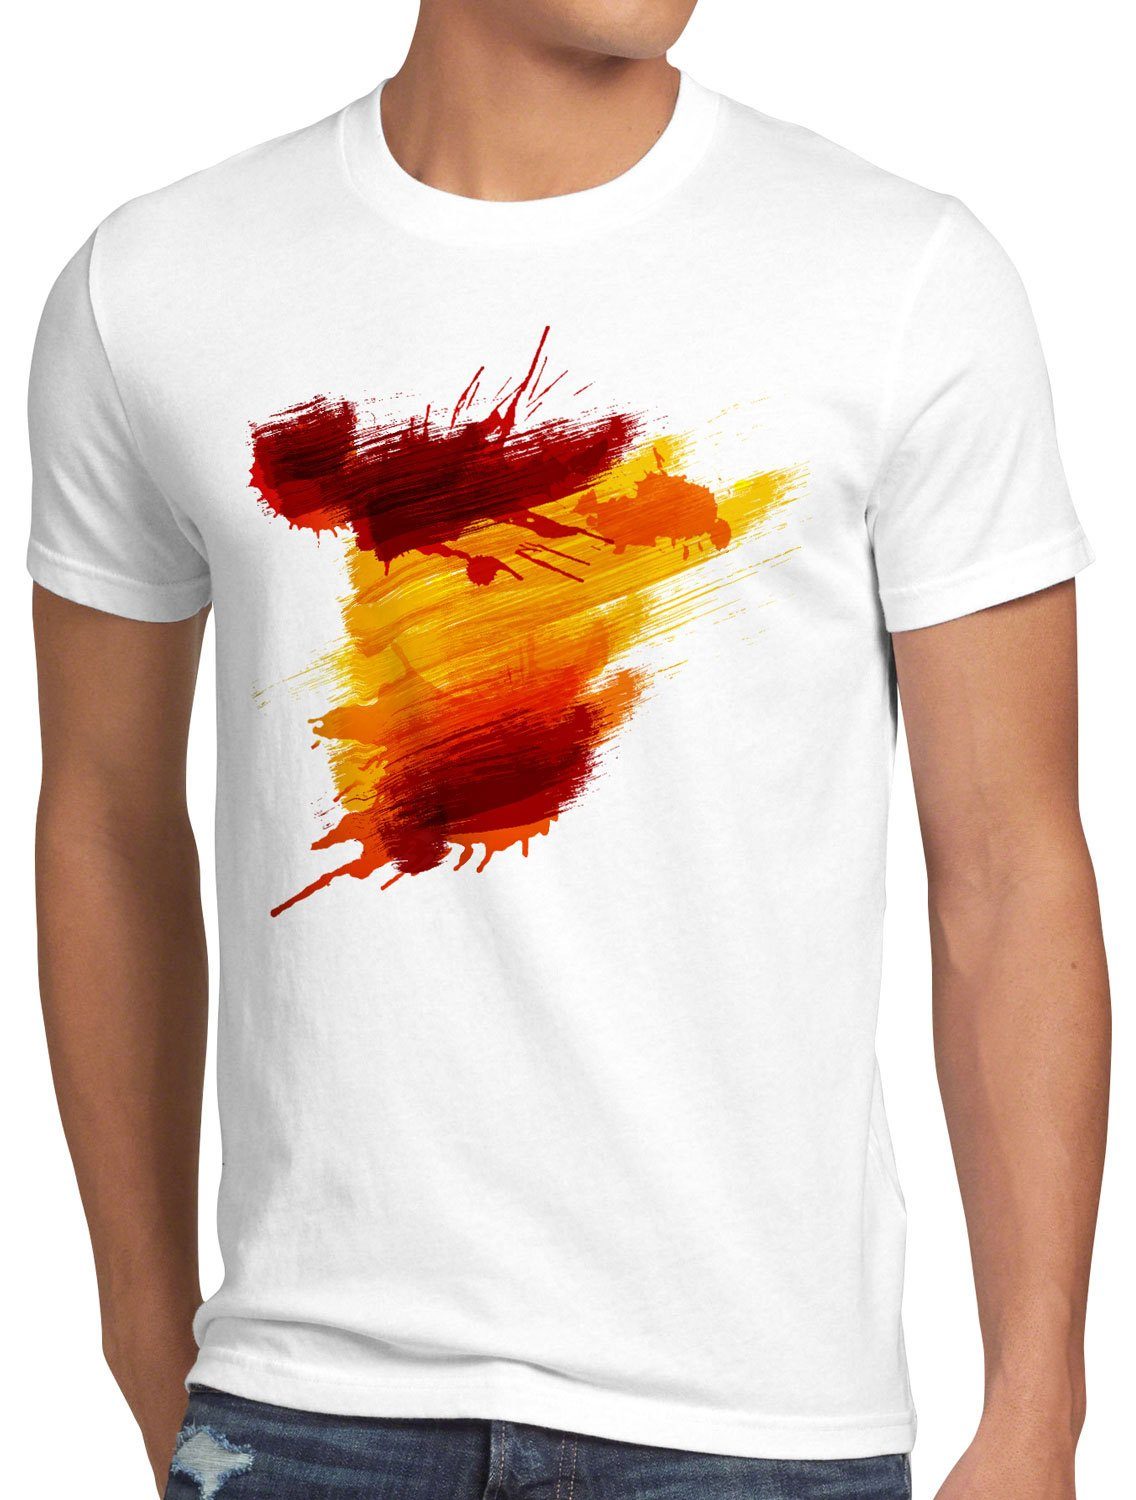 EM Herren WM style3 Print-Shirt T-Shirt weiß Fahne Sport Spain Flagge Fußball Spanien